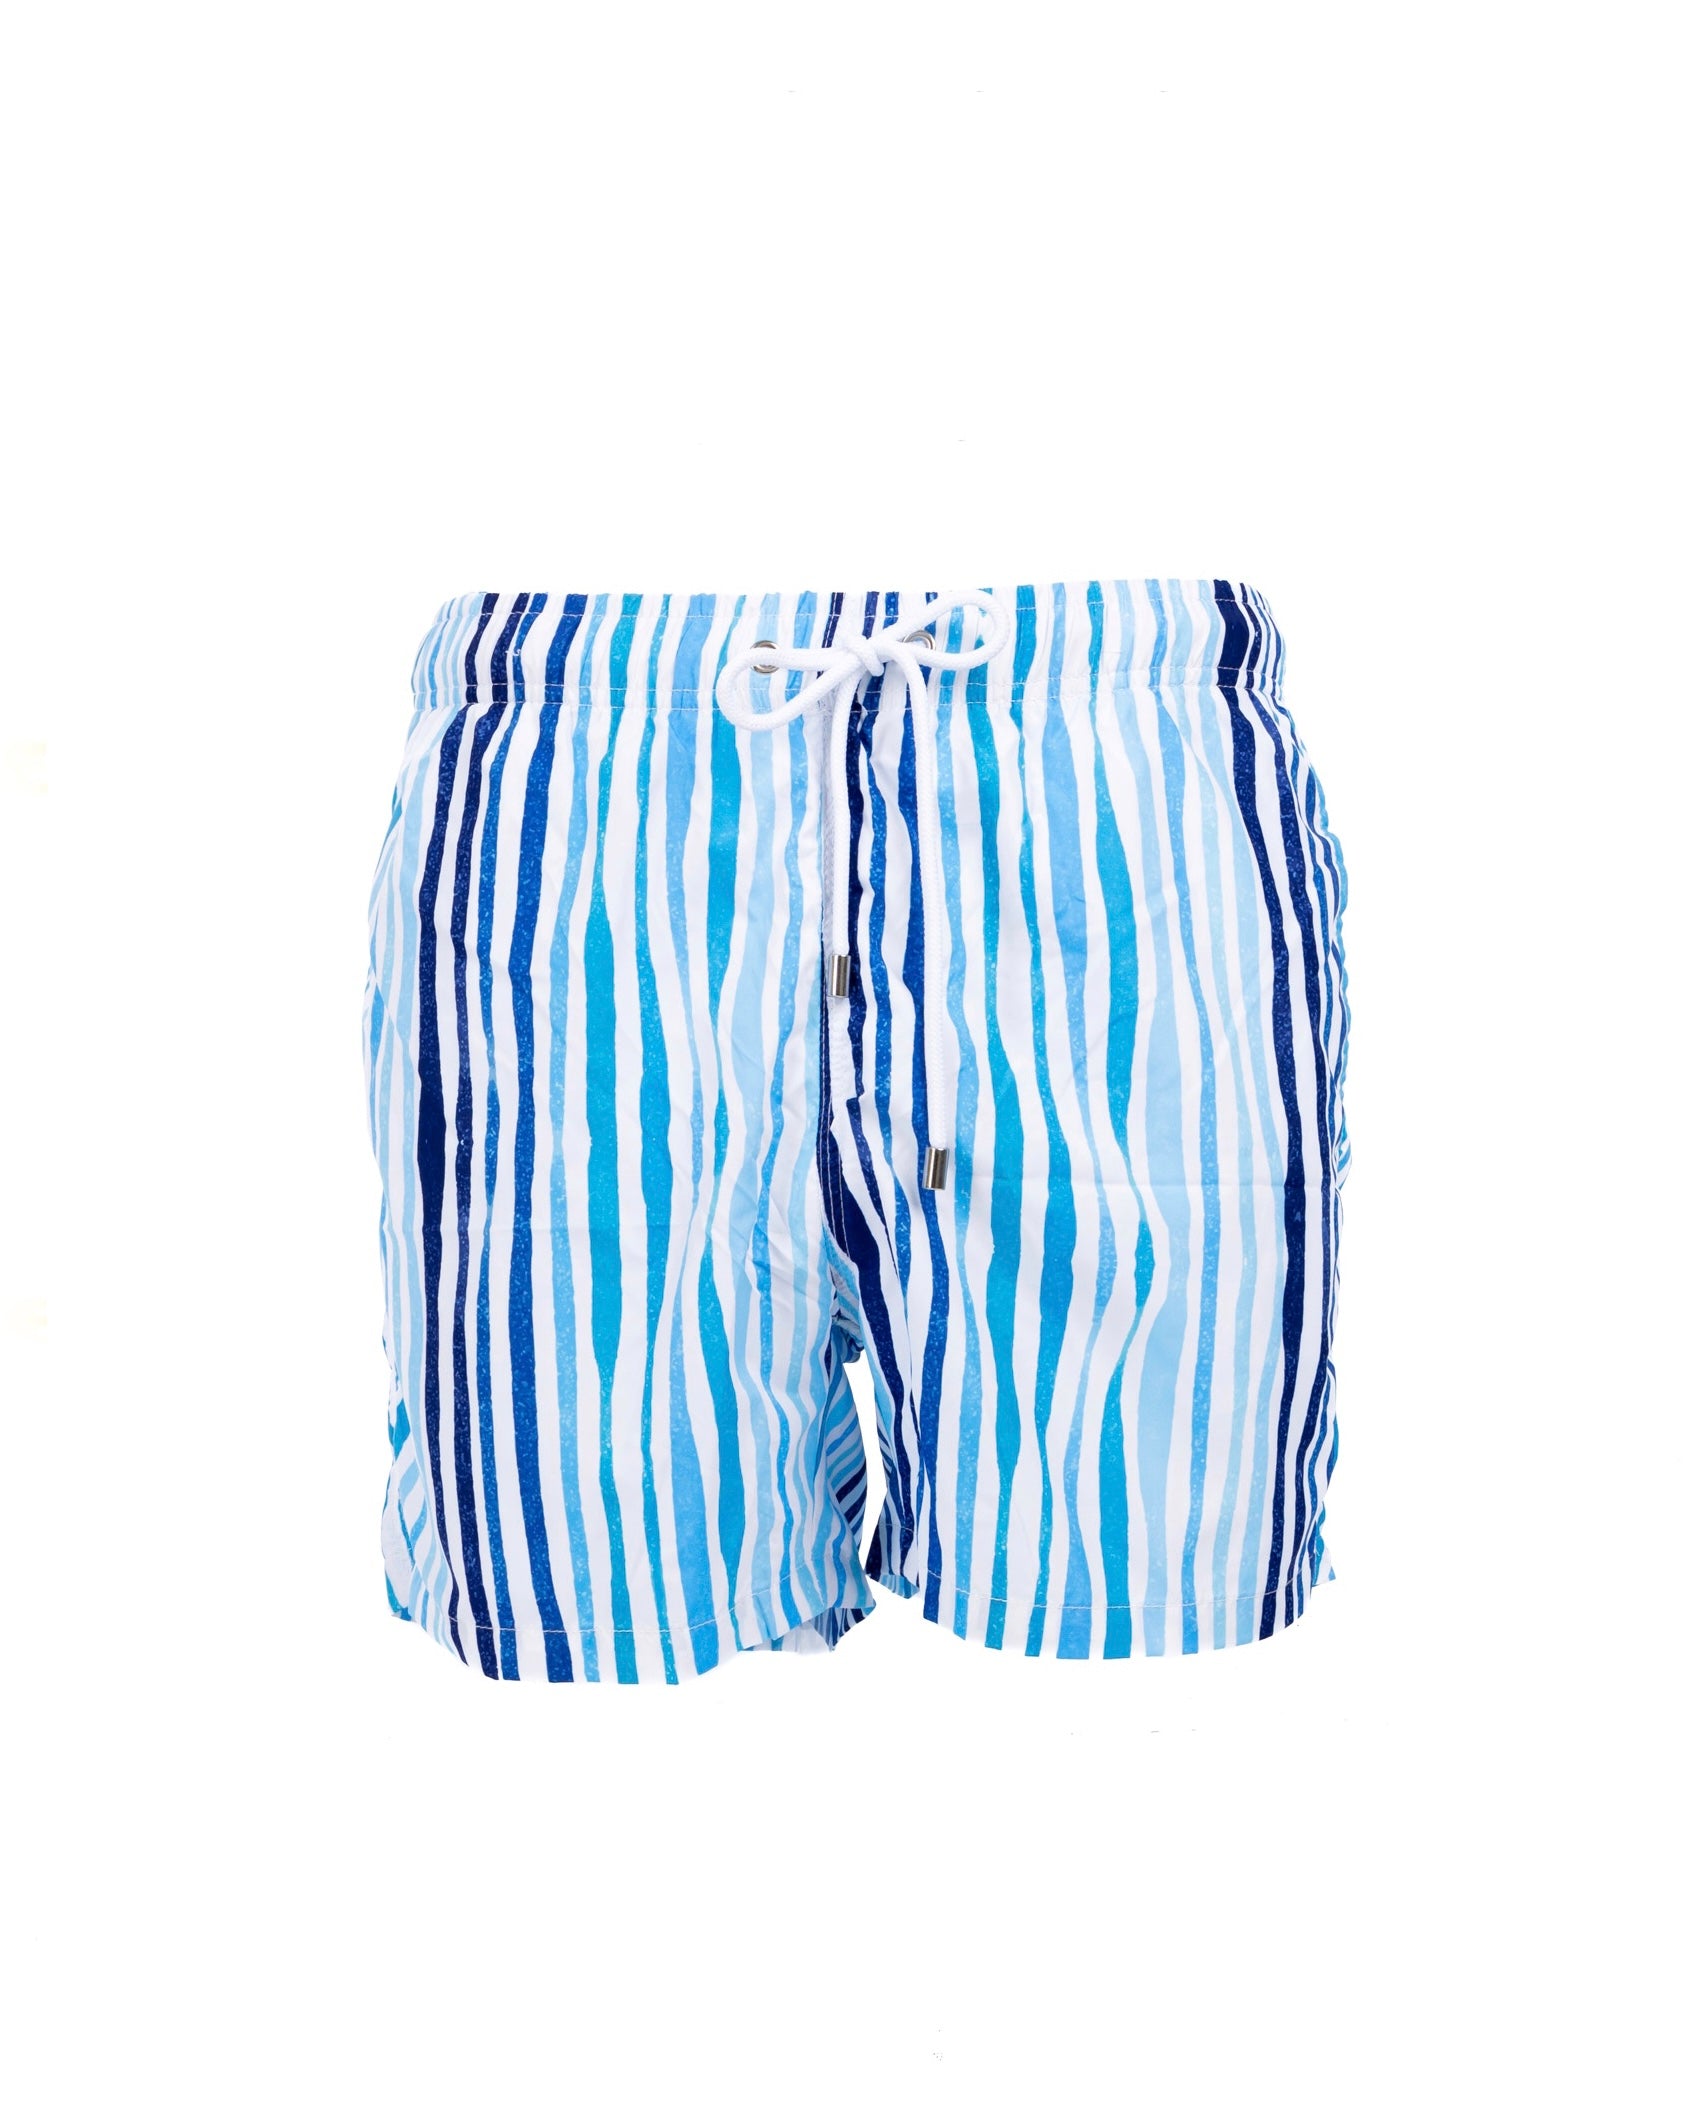 Stripe - light blue patterned swimsuit